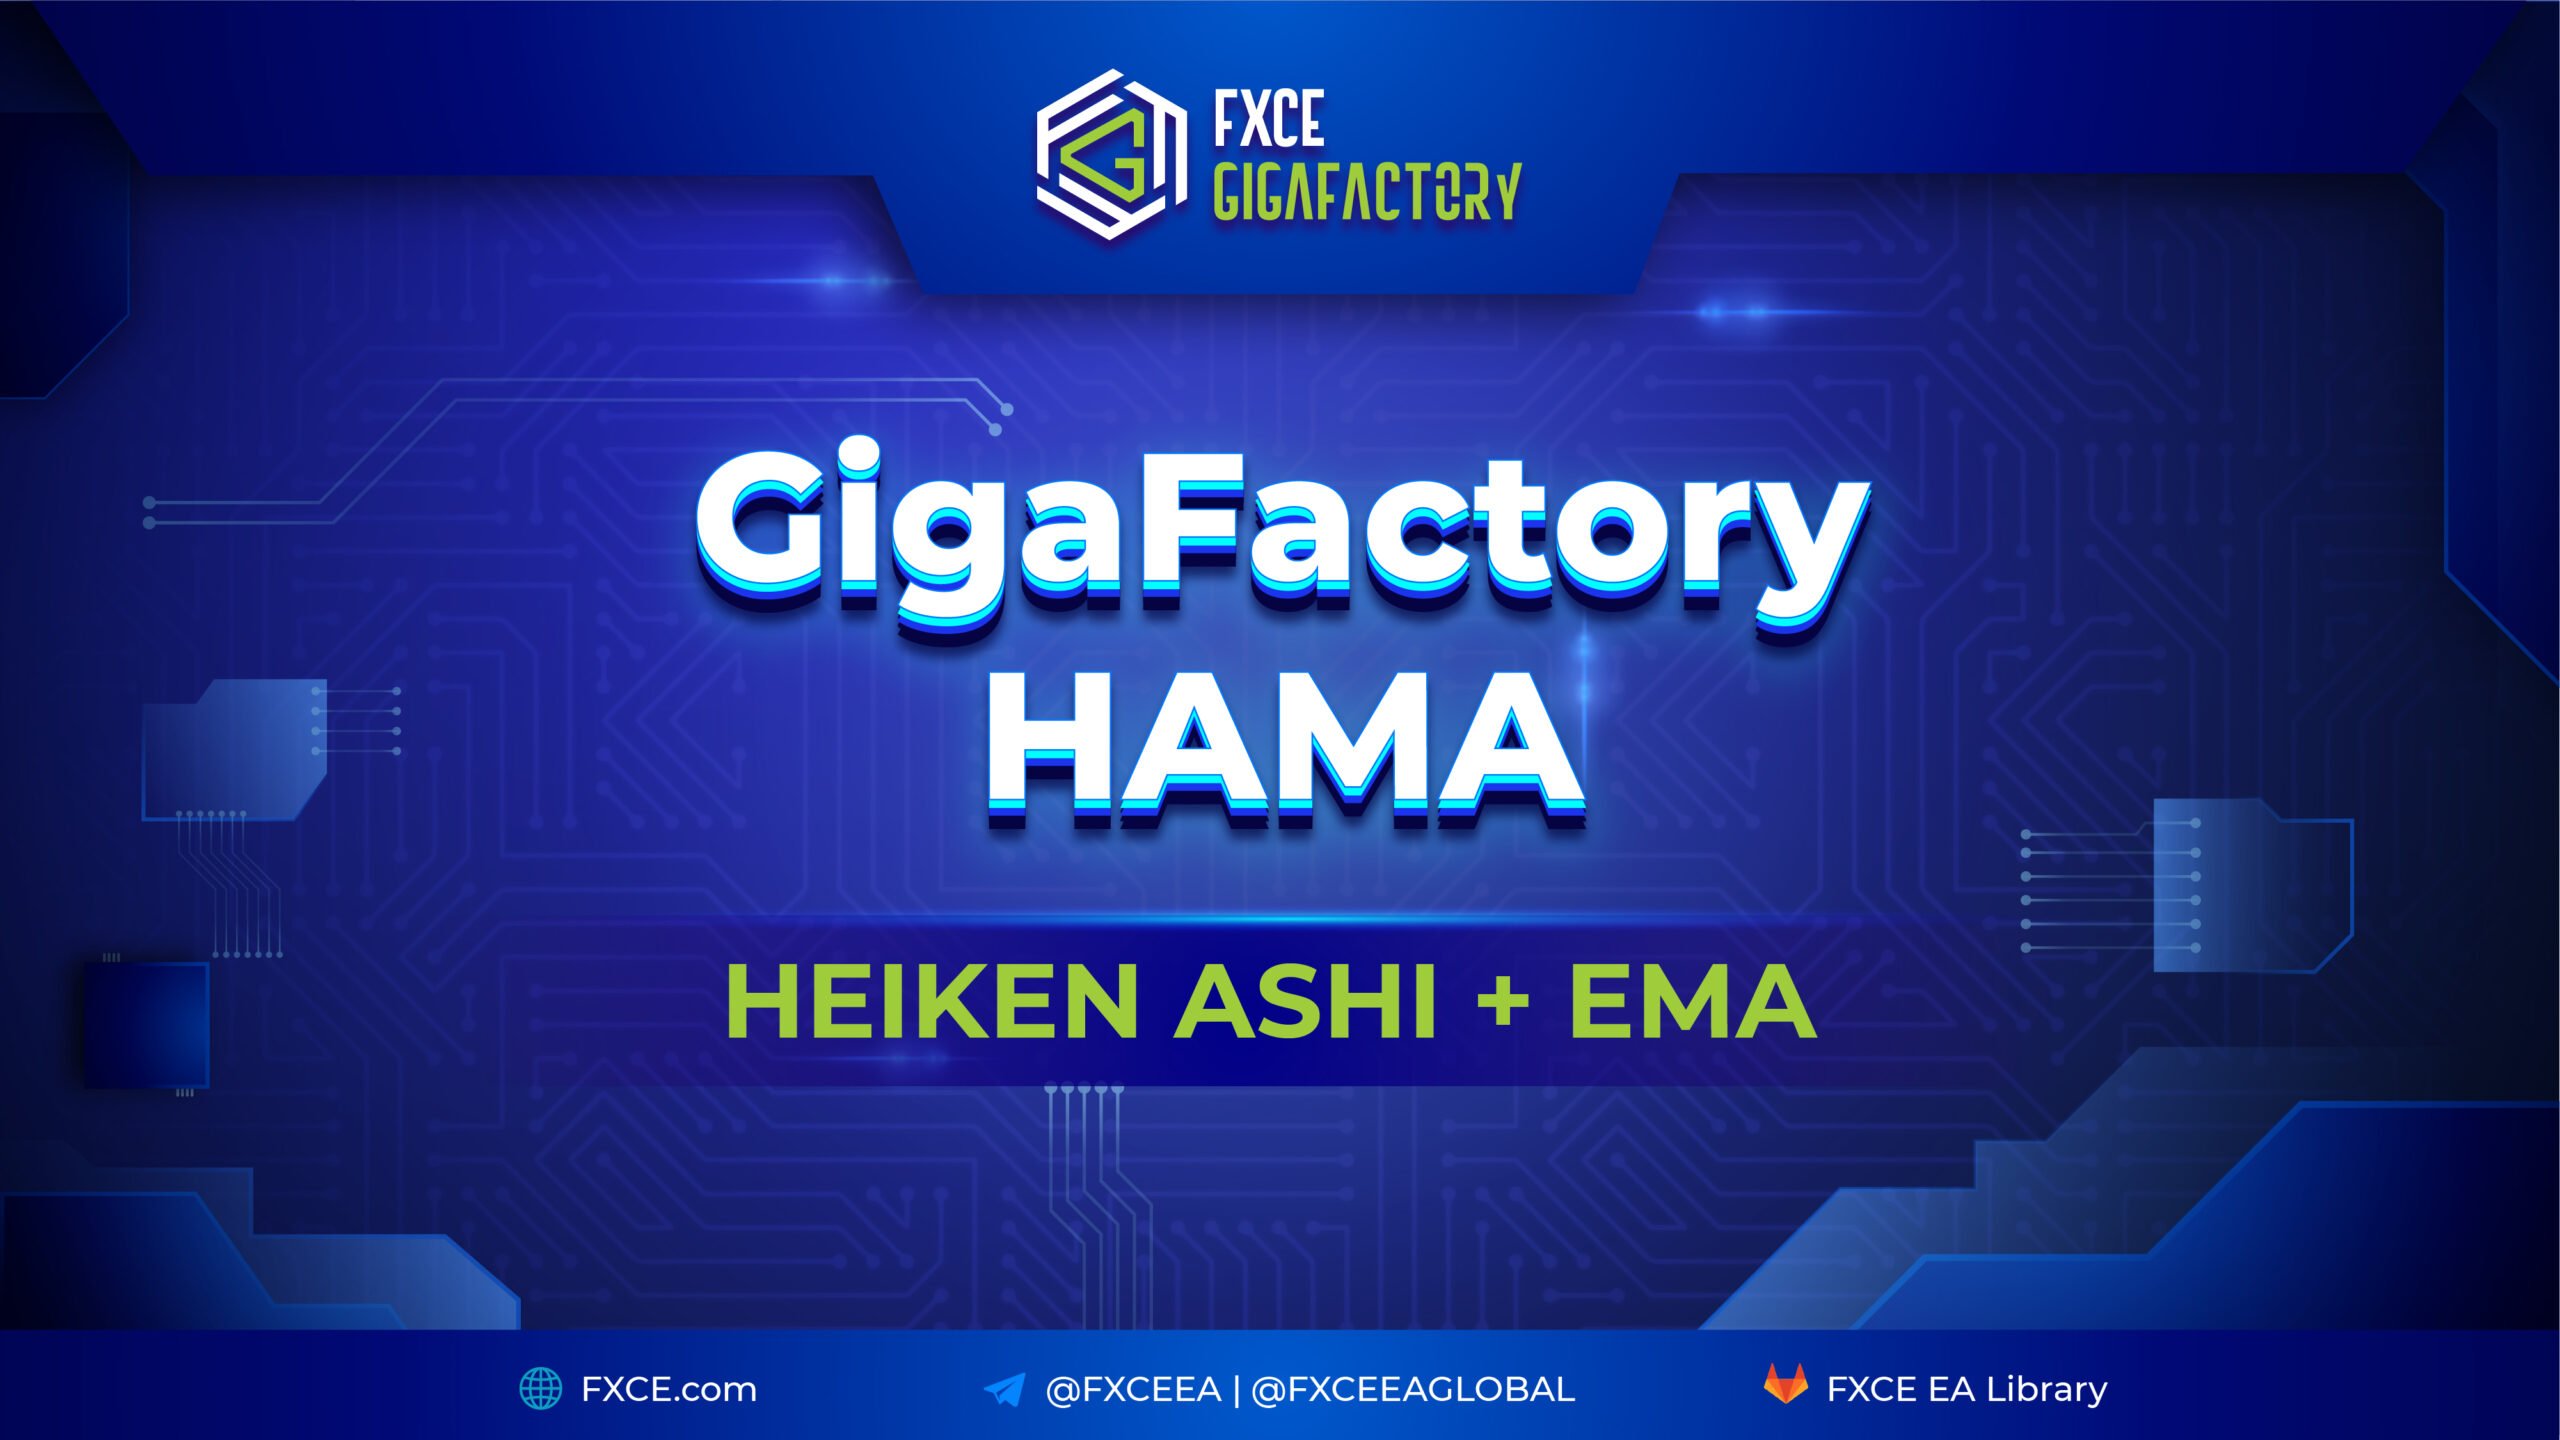 Hướng dẫn sử dụng GigaFactory HAMA - HEIKEN ASHI + EMA